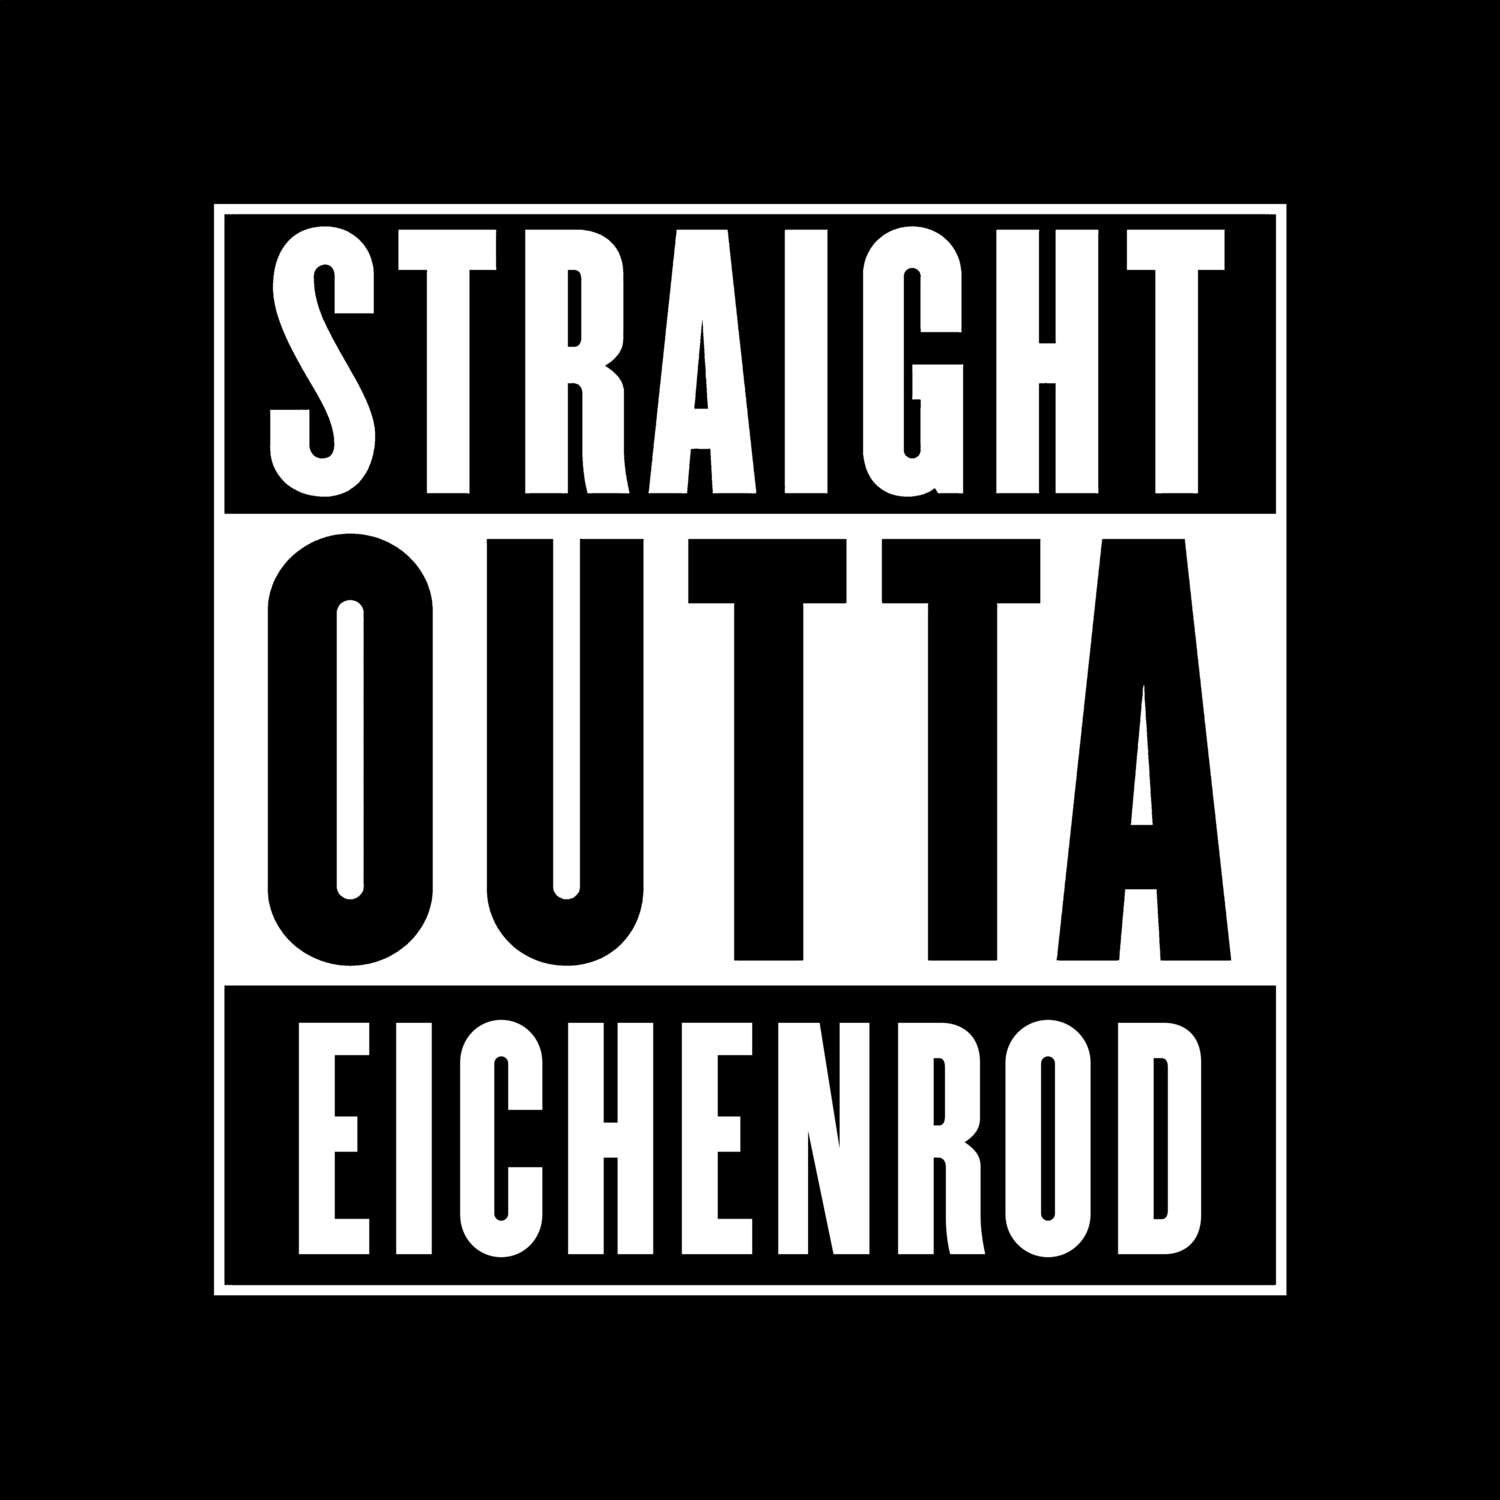 Eichenrod T-Shirt »Straight Outta«